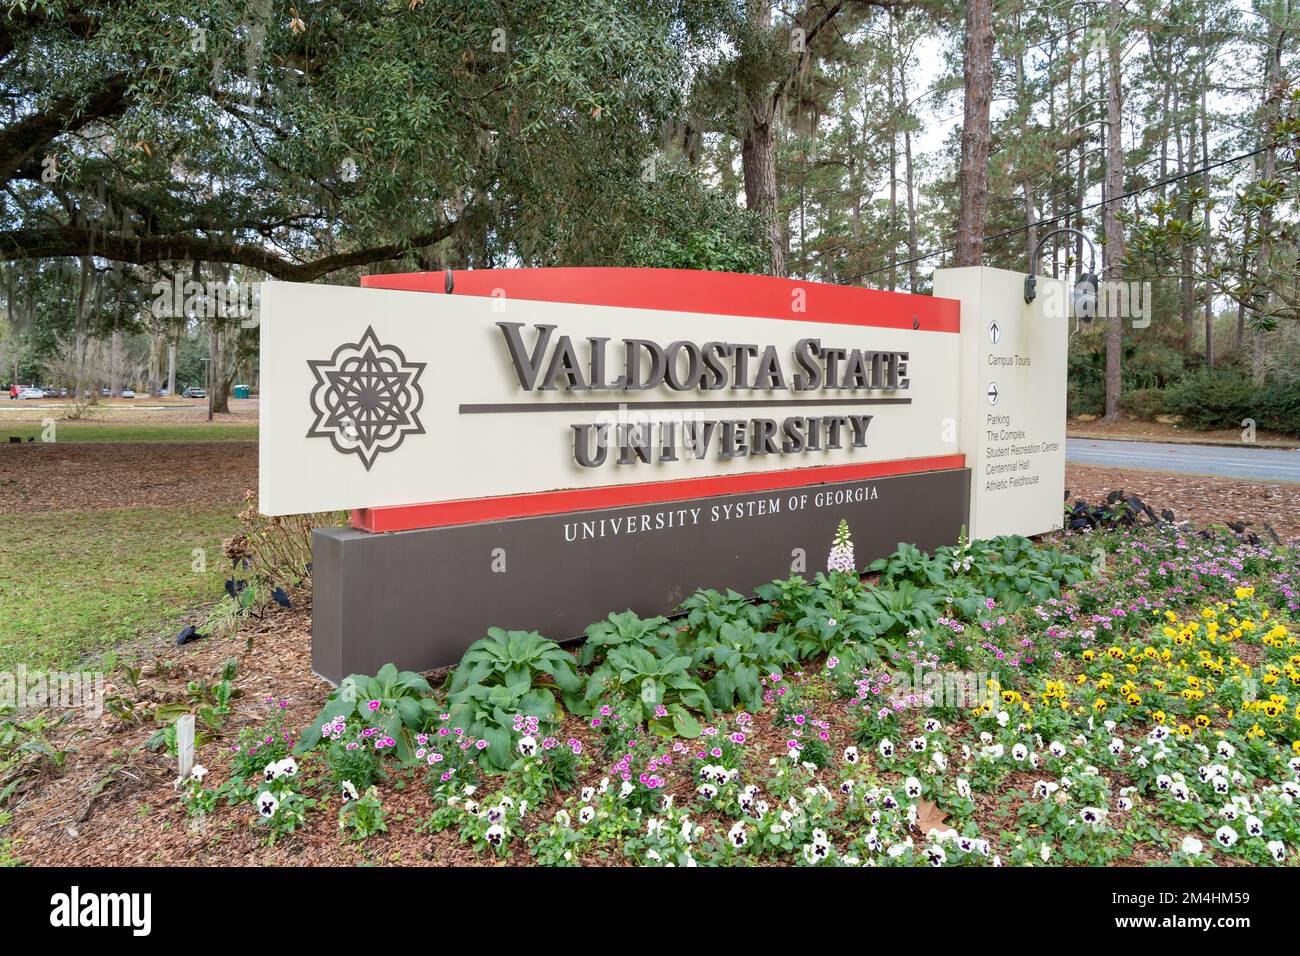 Valdosta, Georgia, EE.UU. - 30 de diciembre de 2021: La señal de tierra de Valdosta State University se muestra Valdosta, Georgia, EE.UU. Foto de stock